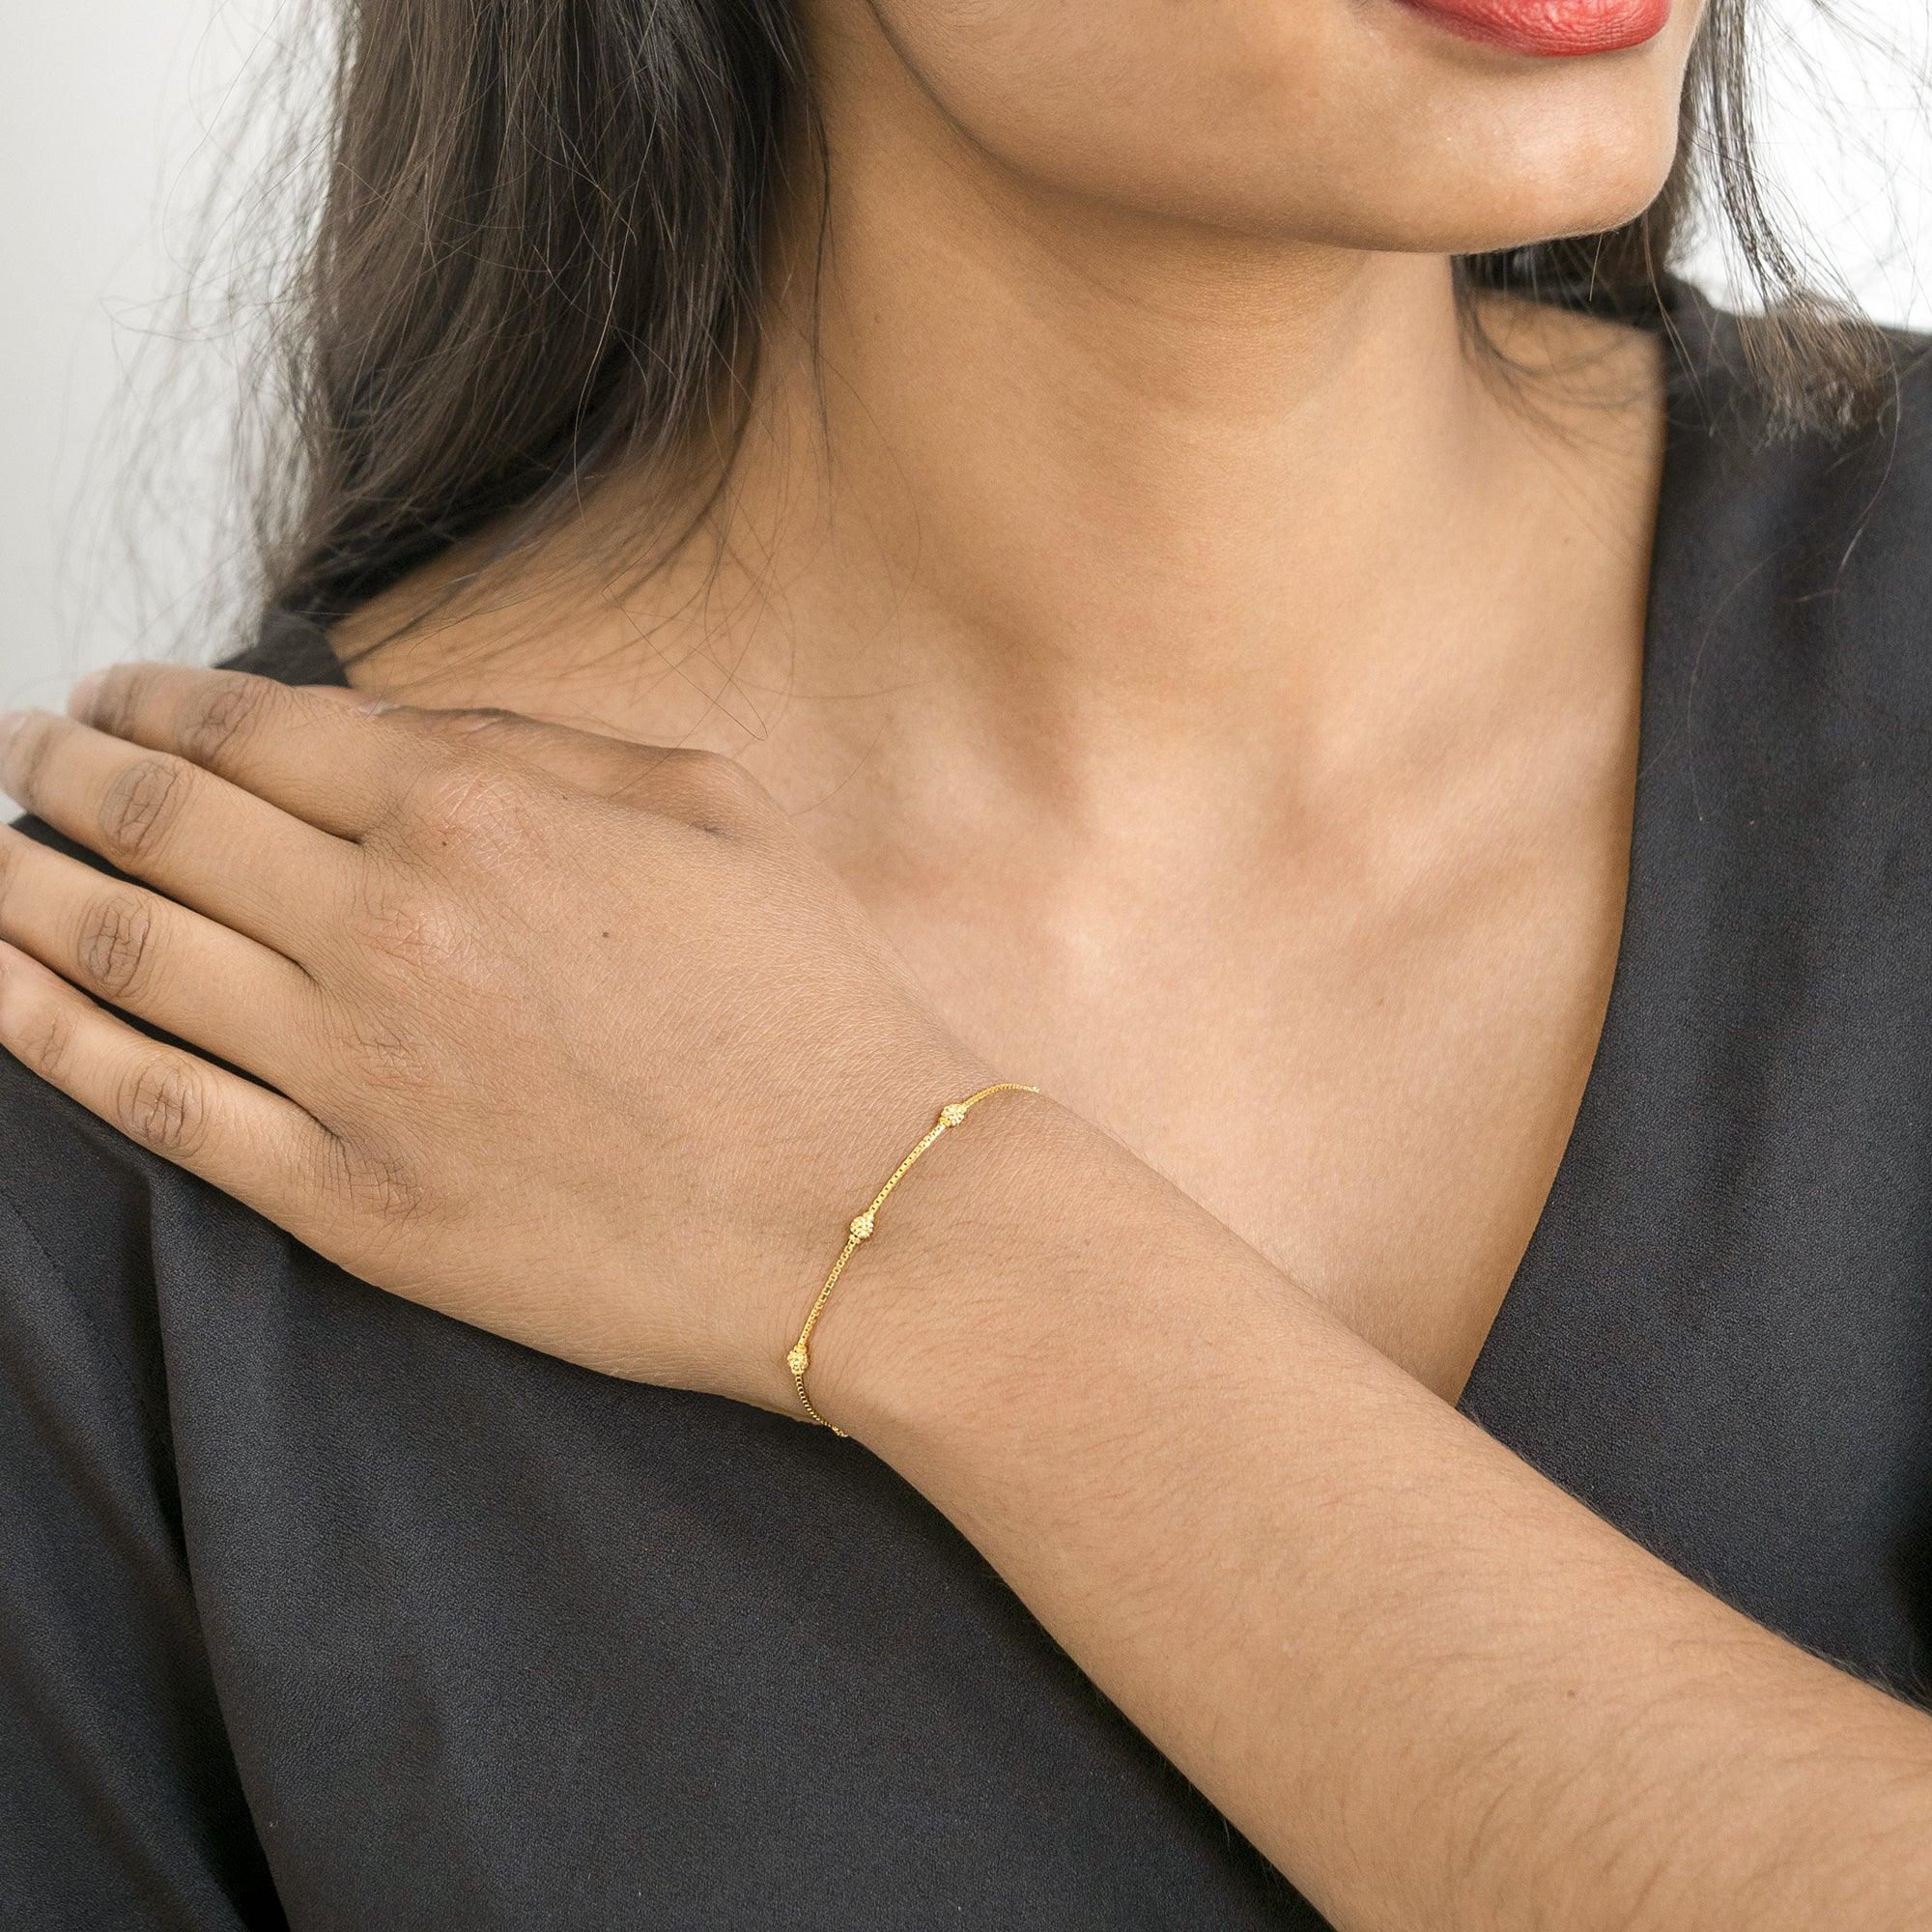 22K Gold Bracelet For Women with Cz - 235-GBR3012 in 8.850 Grams